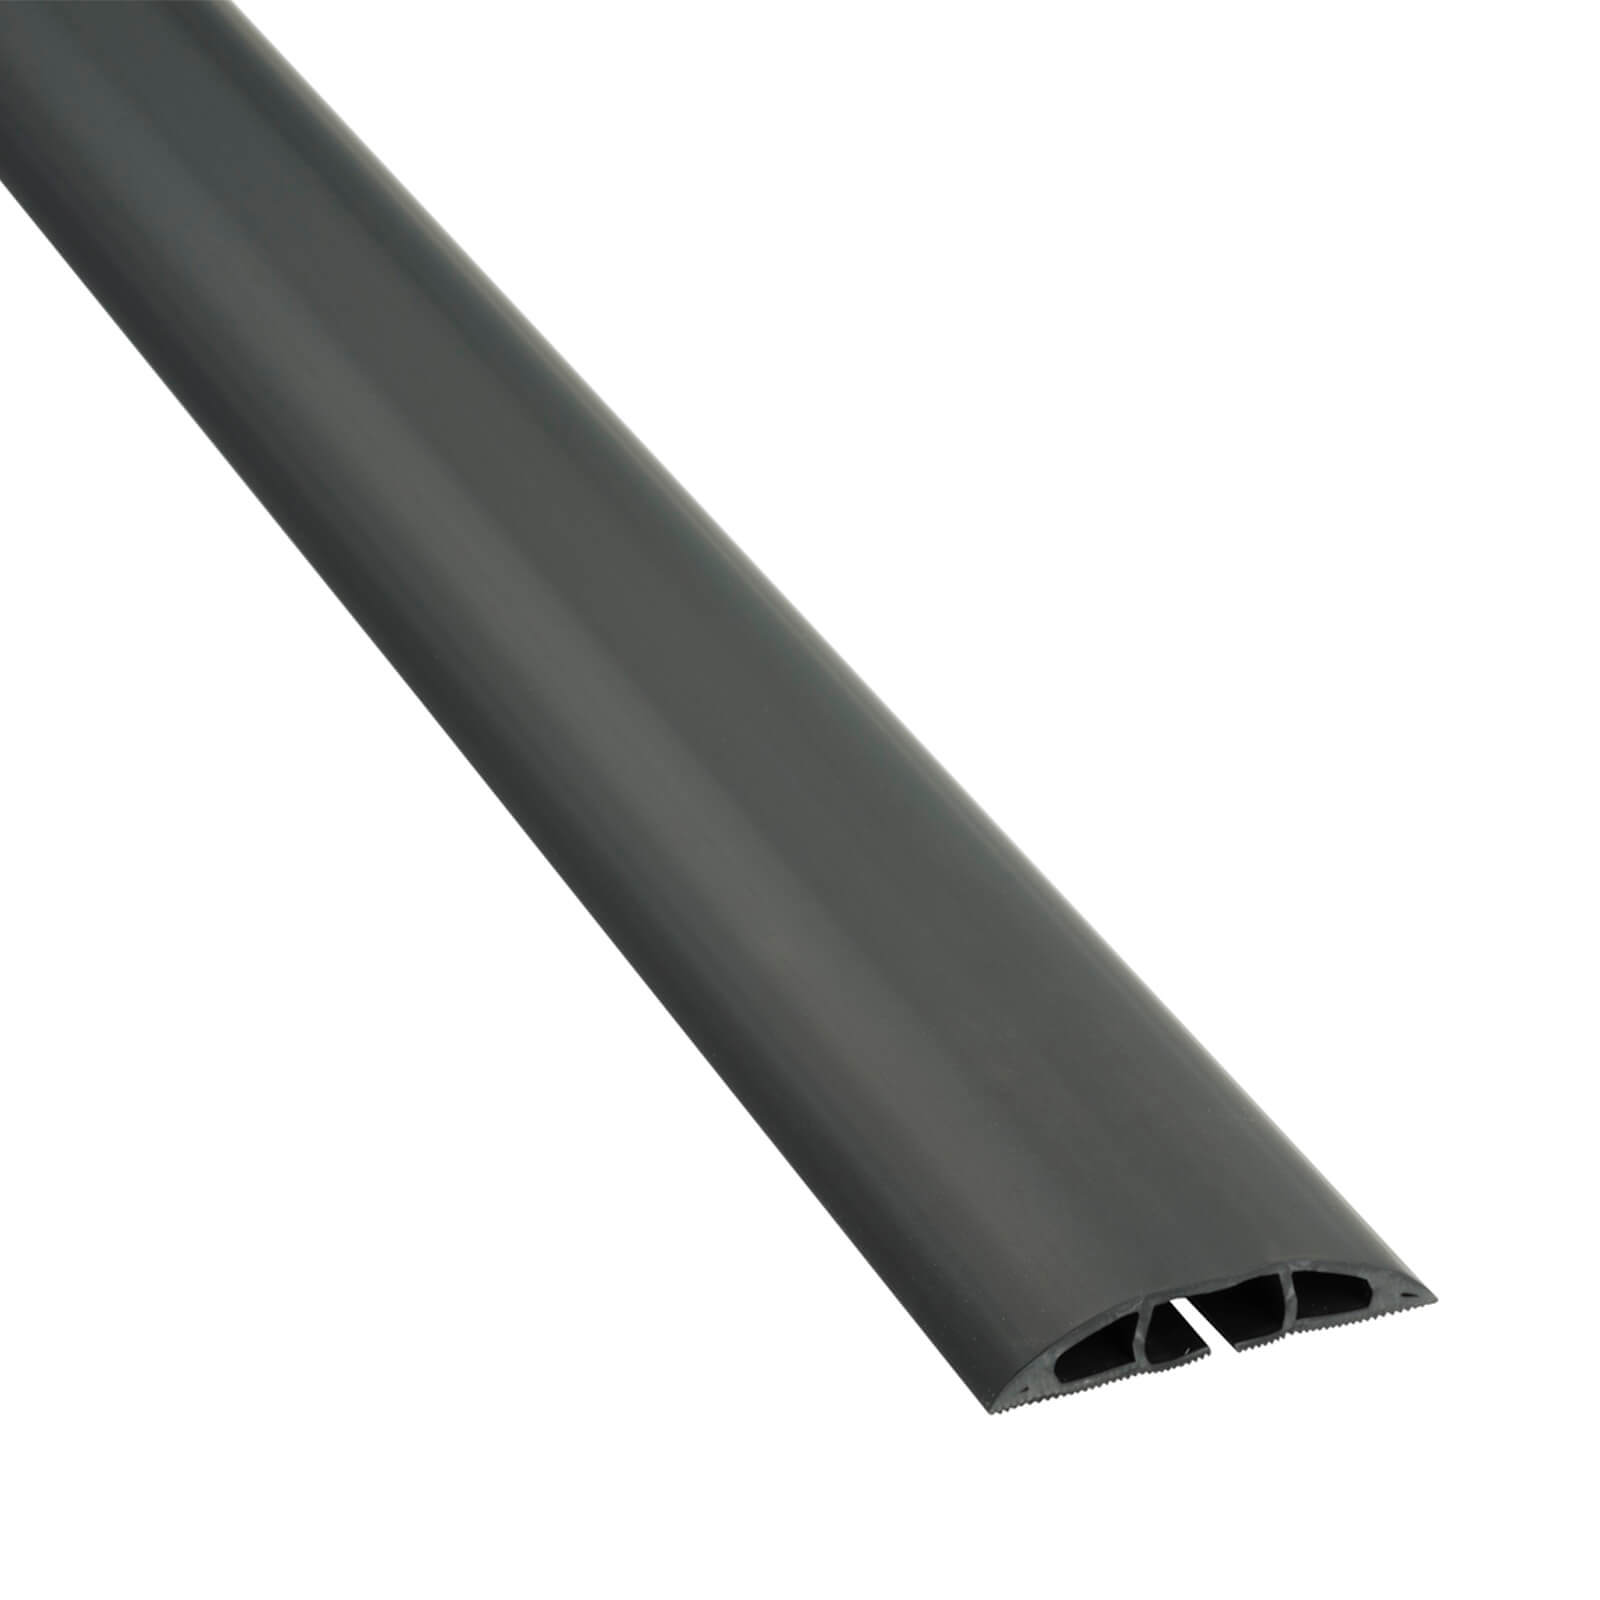 D-Line Light Duty Floor Cable Cover 17mm x 9mm x 1.8m Black